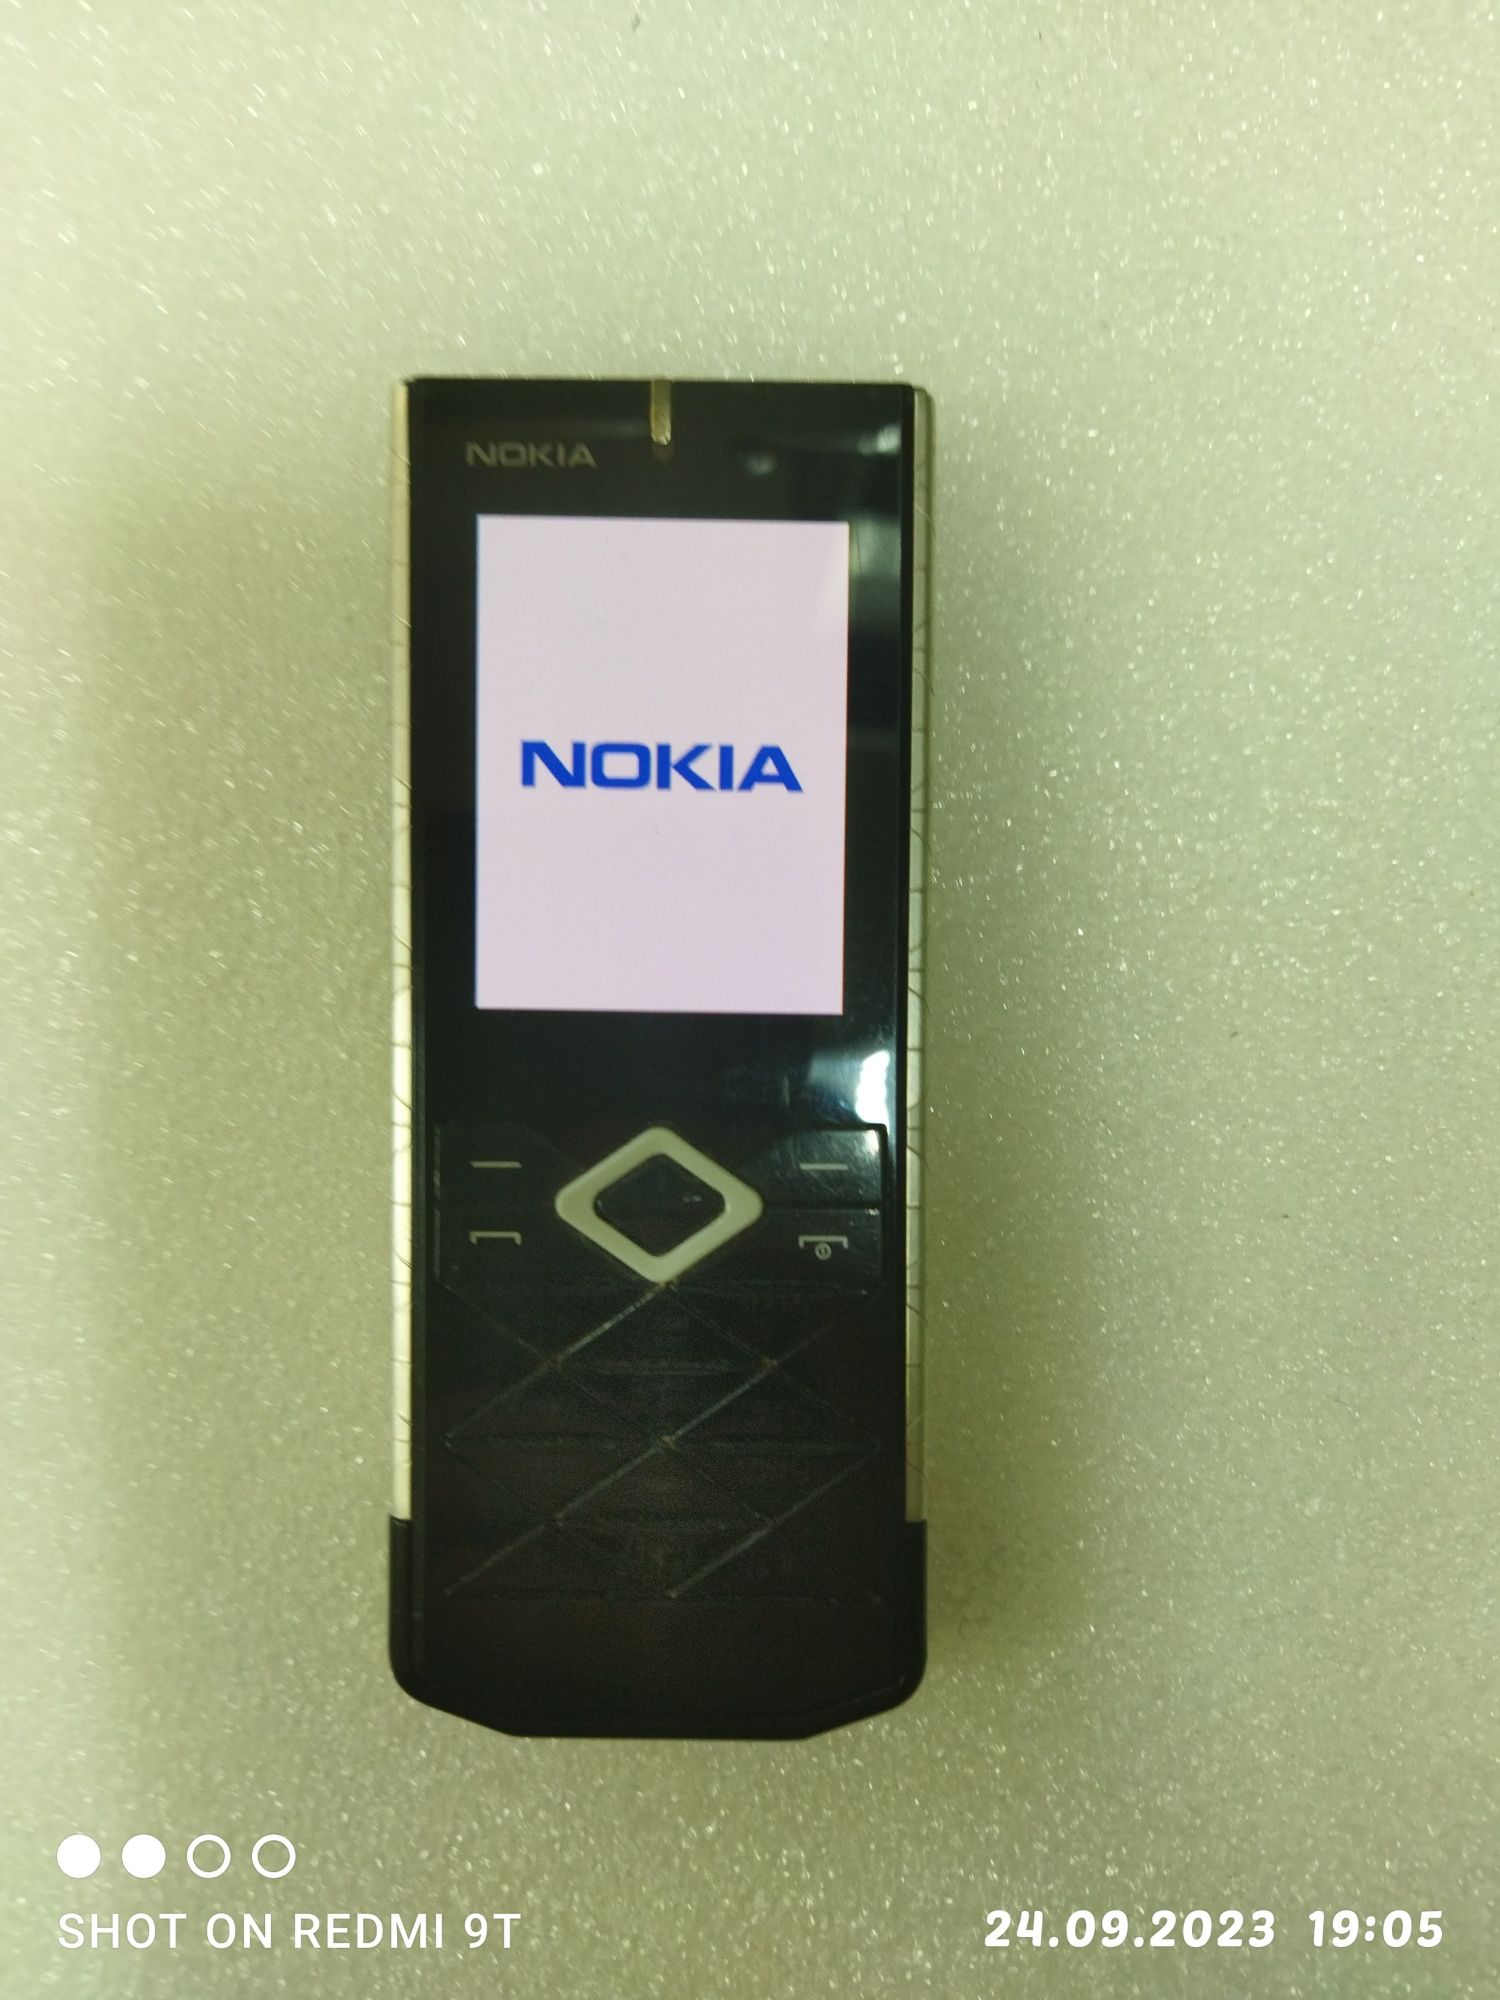 Nokia 7900 prismв хорошем состоянии